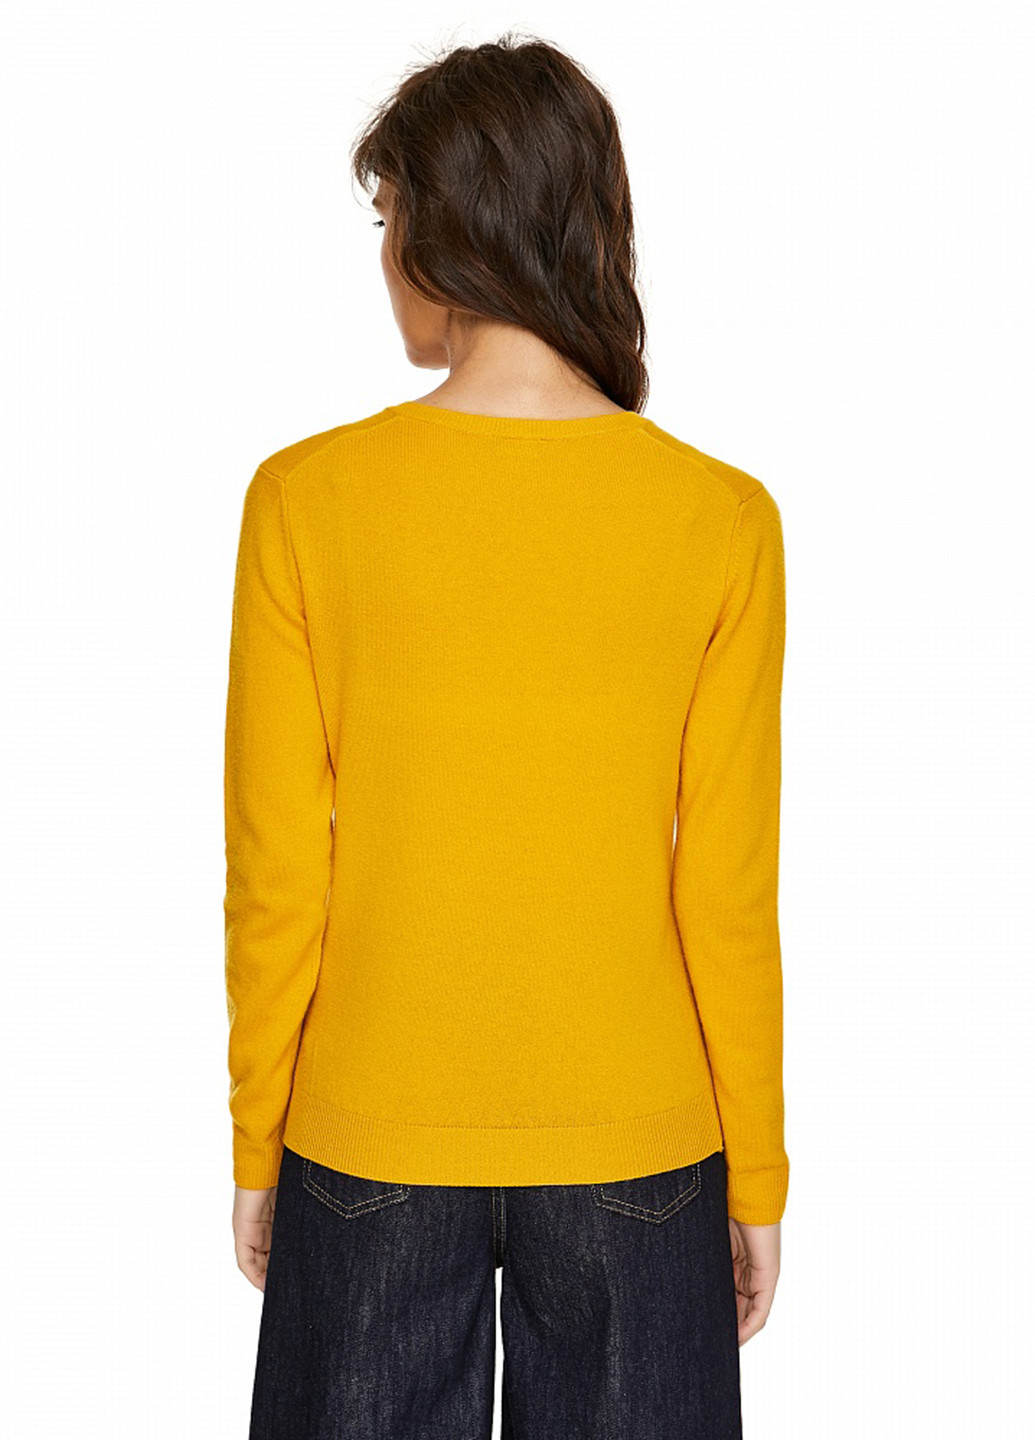 Горчичный демисезонный пуловер пуловер United Colors of Benetton